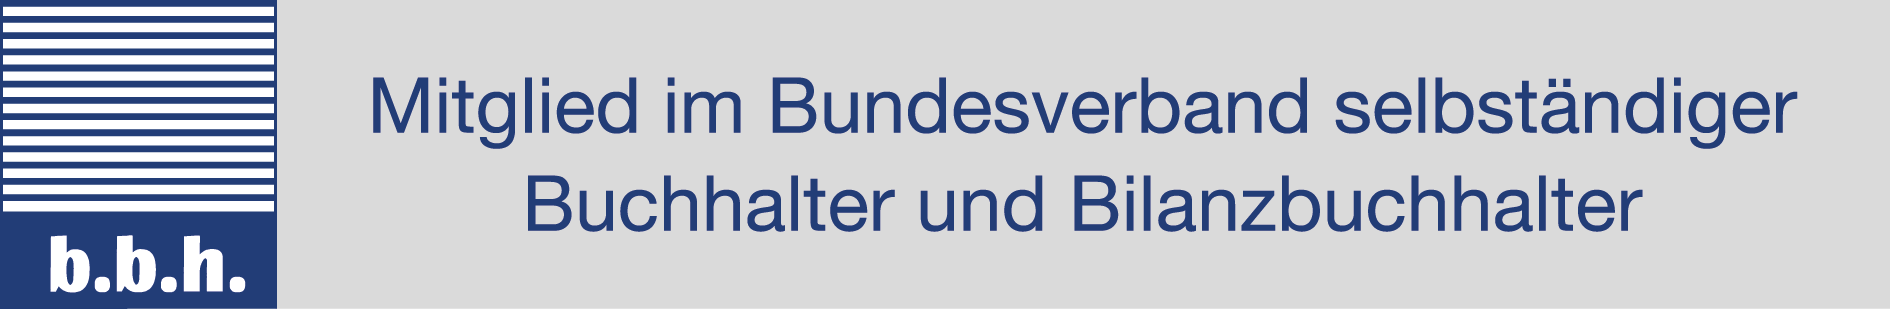 b.b.h. Bundesverband selbständiger Buchhalter und Bilanzbuchhalter e. V.